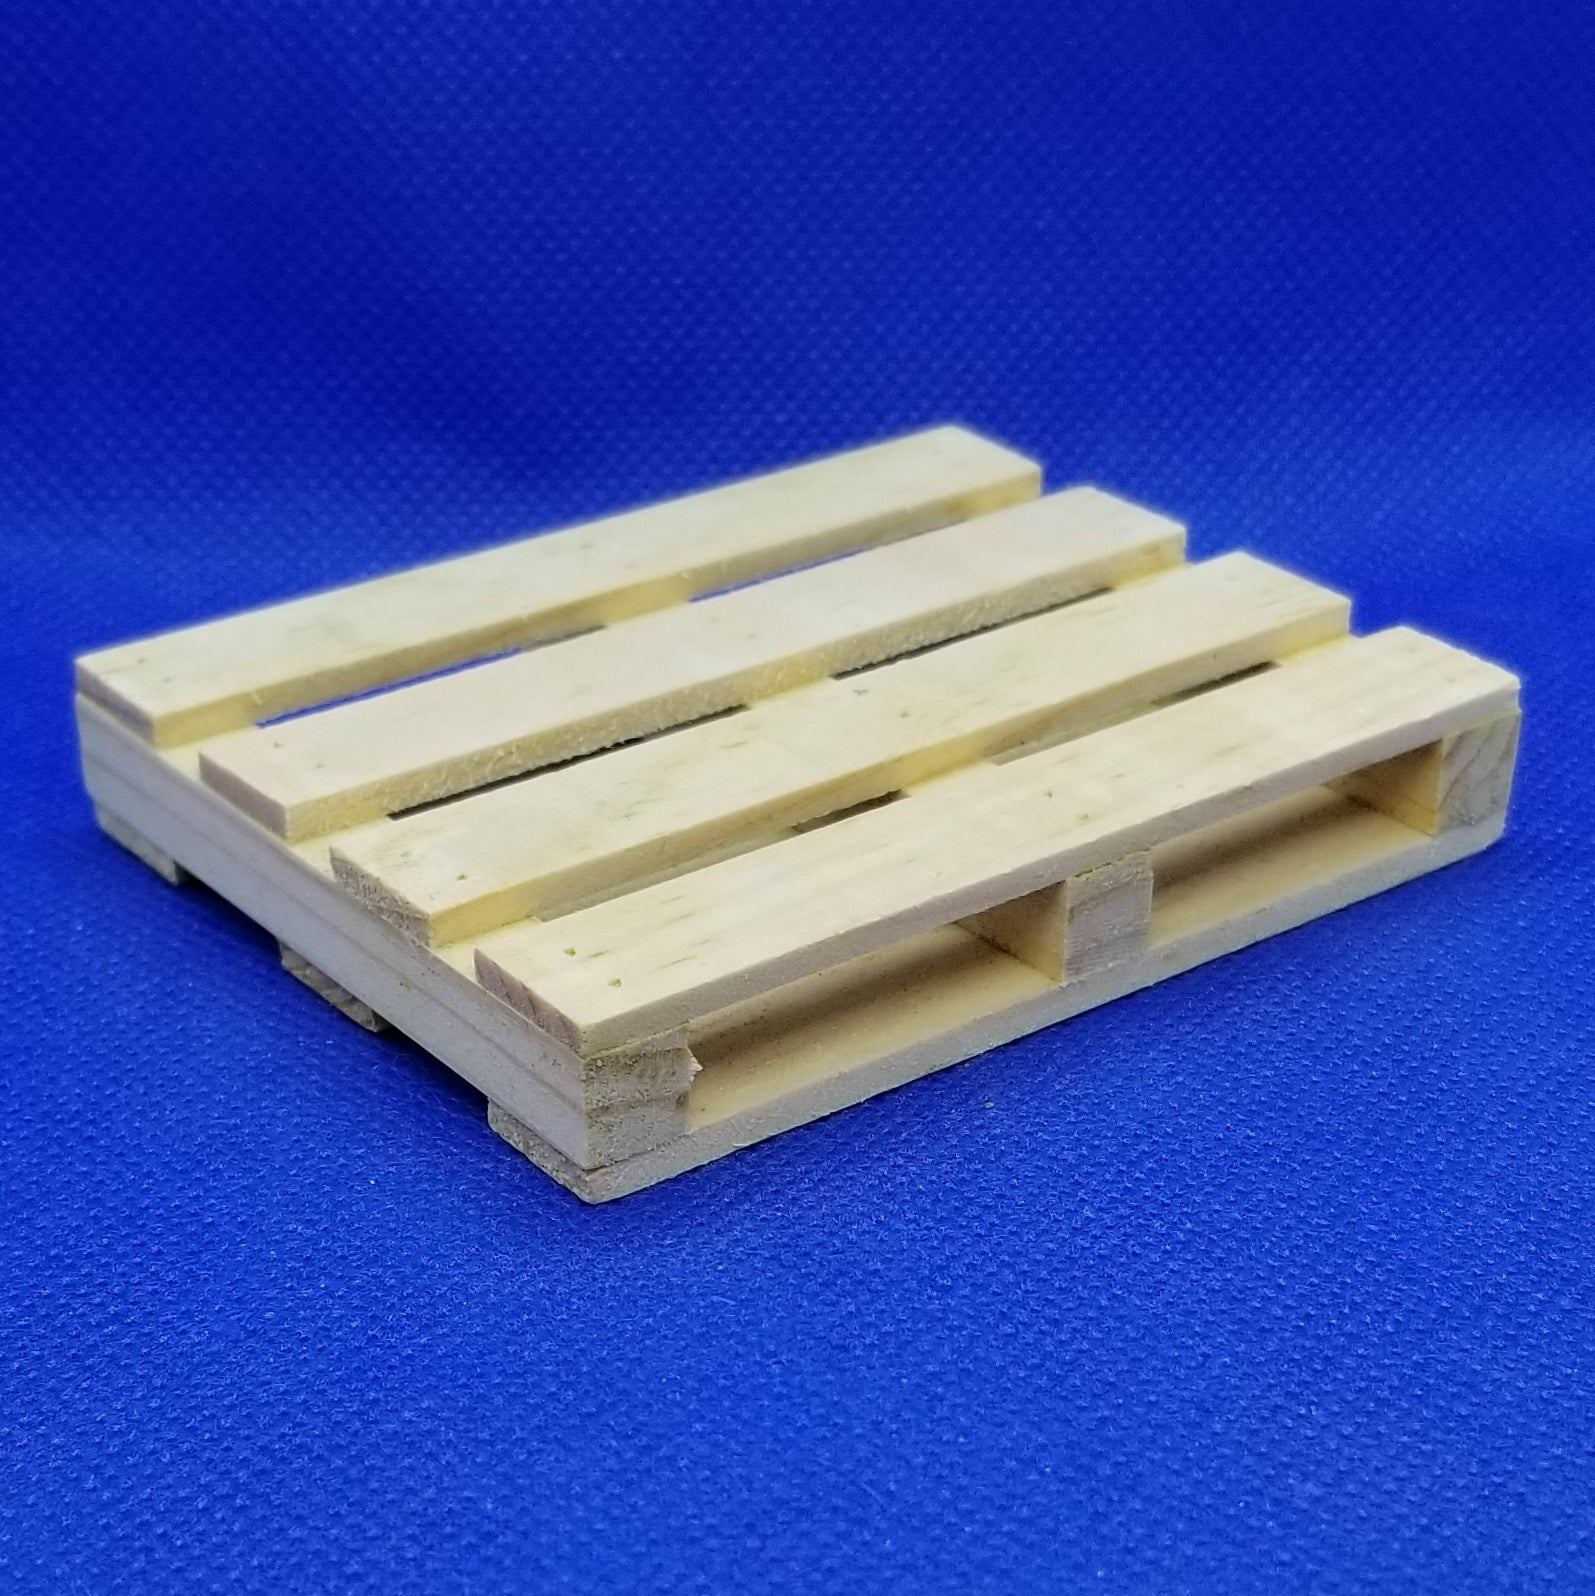 Miniature Bricks with Pallet 1:12 Scale, Mini Building Materials, School  Project